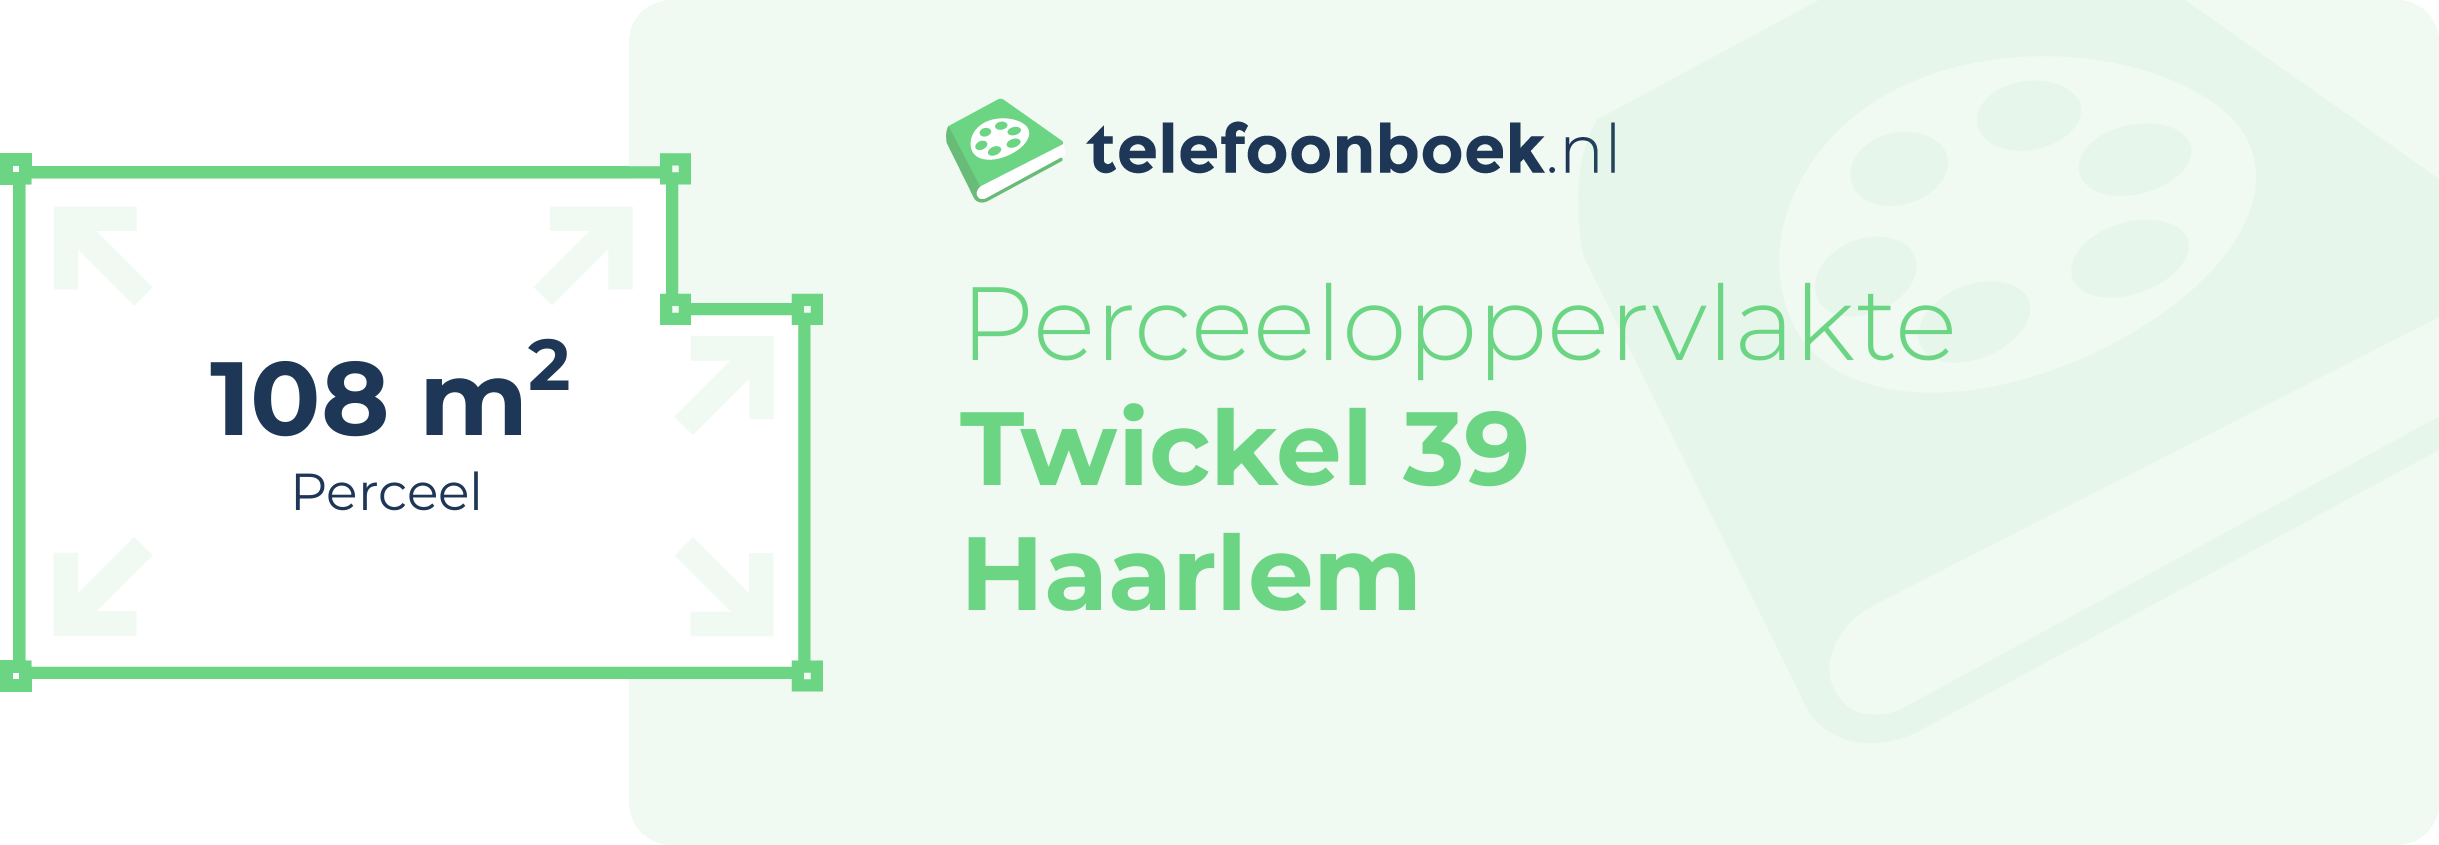 Perceeloppervlakte Twickel 39 Haarlem